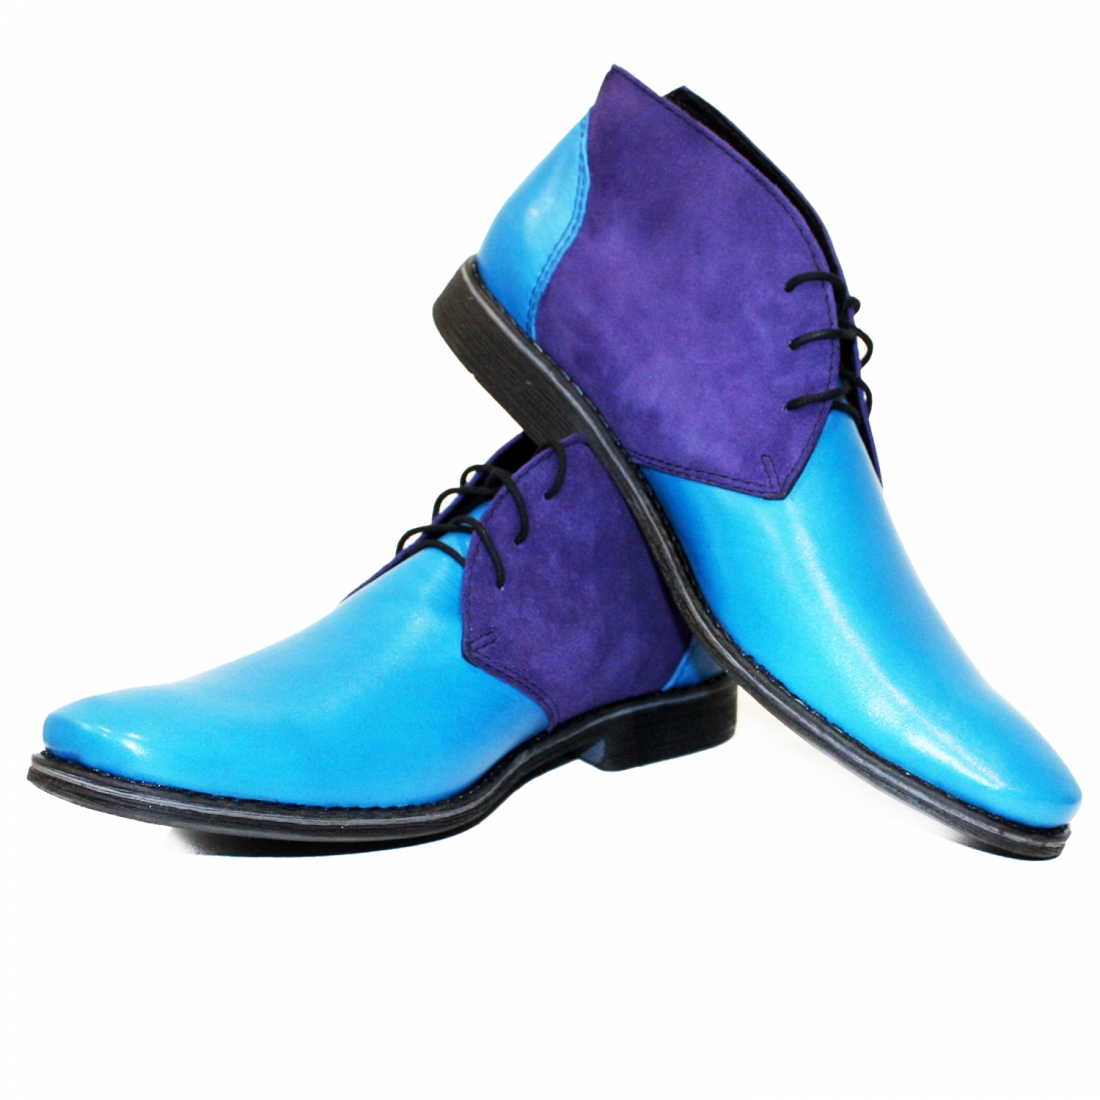 Modello Freddero - Desert Boots - Handmade Colorful Italian Leather Shoes